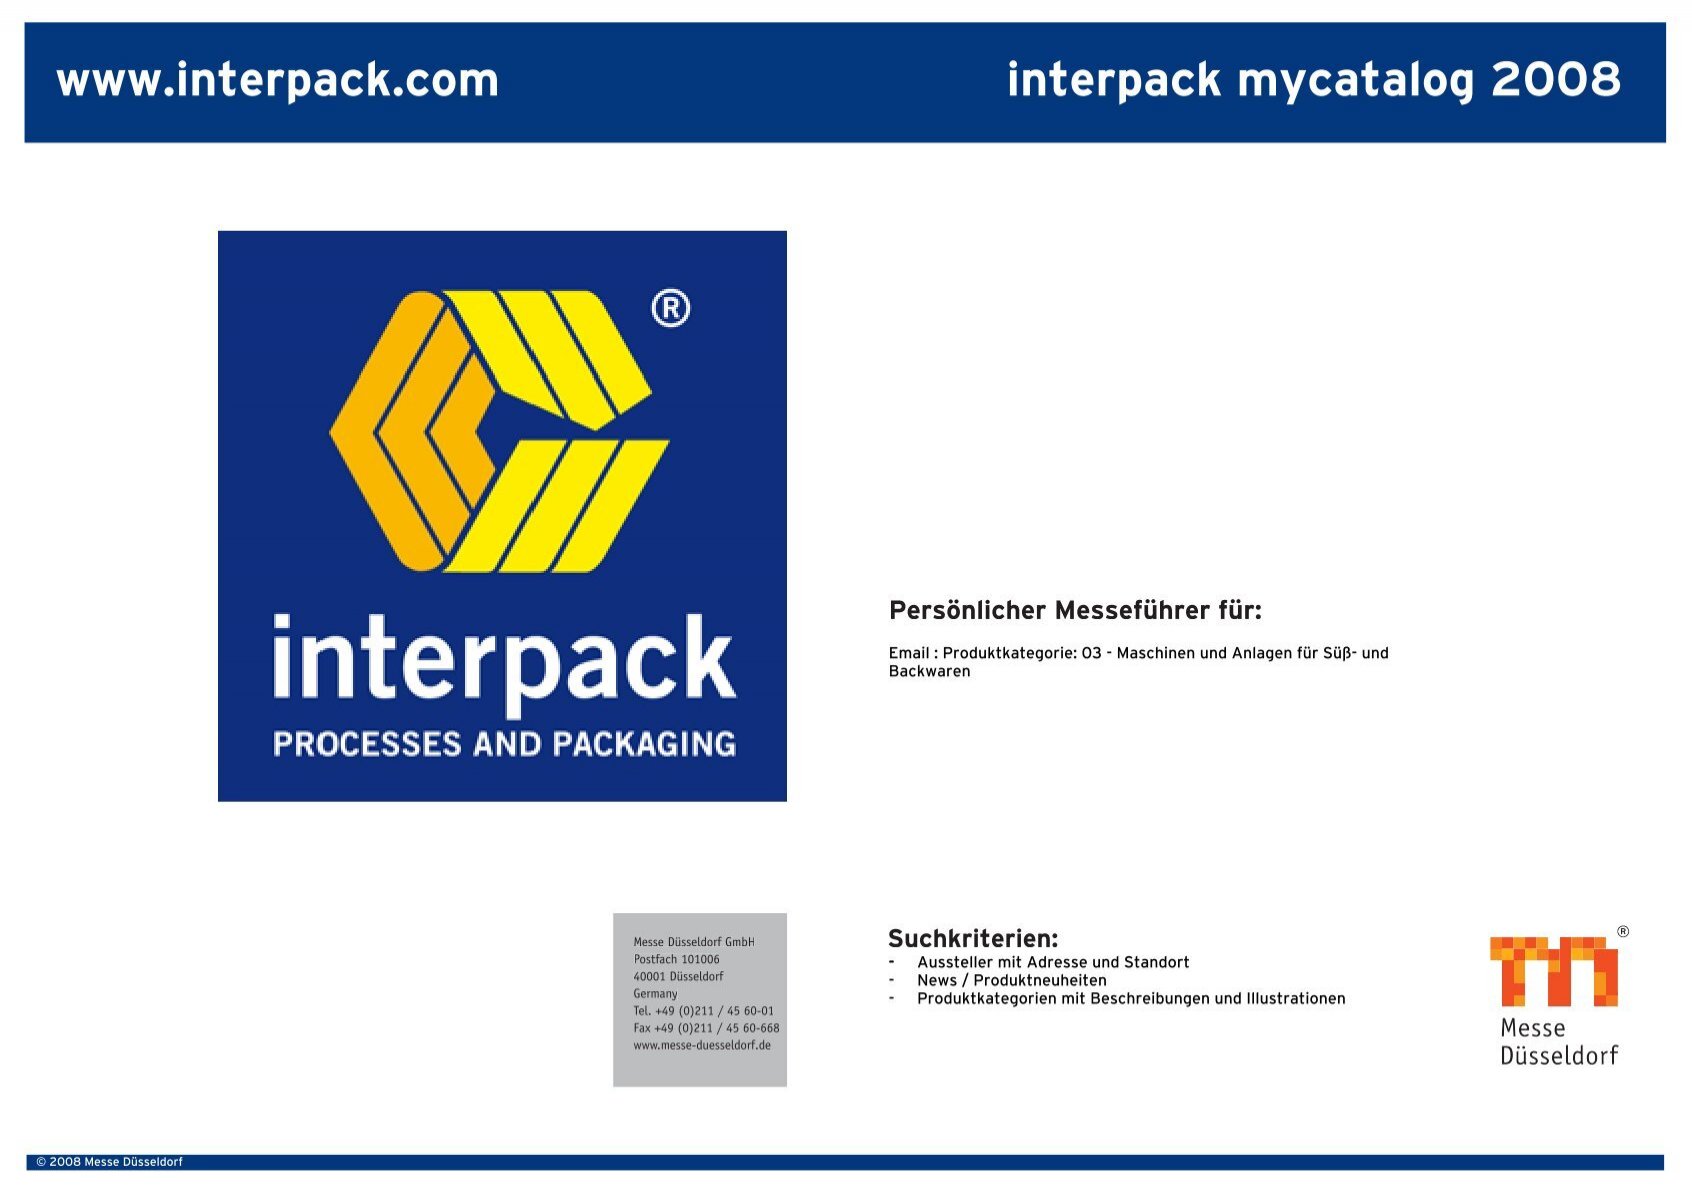 0 2 - Interpack 0 drupamycatalog 4